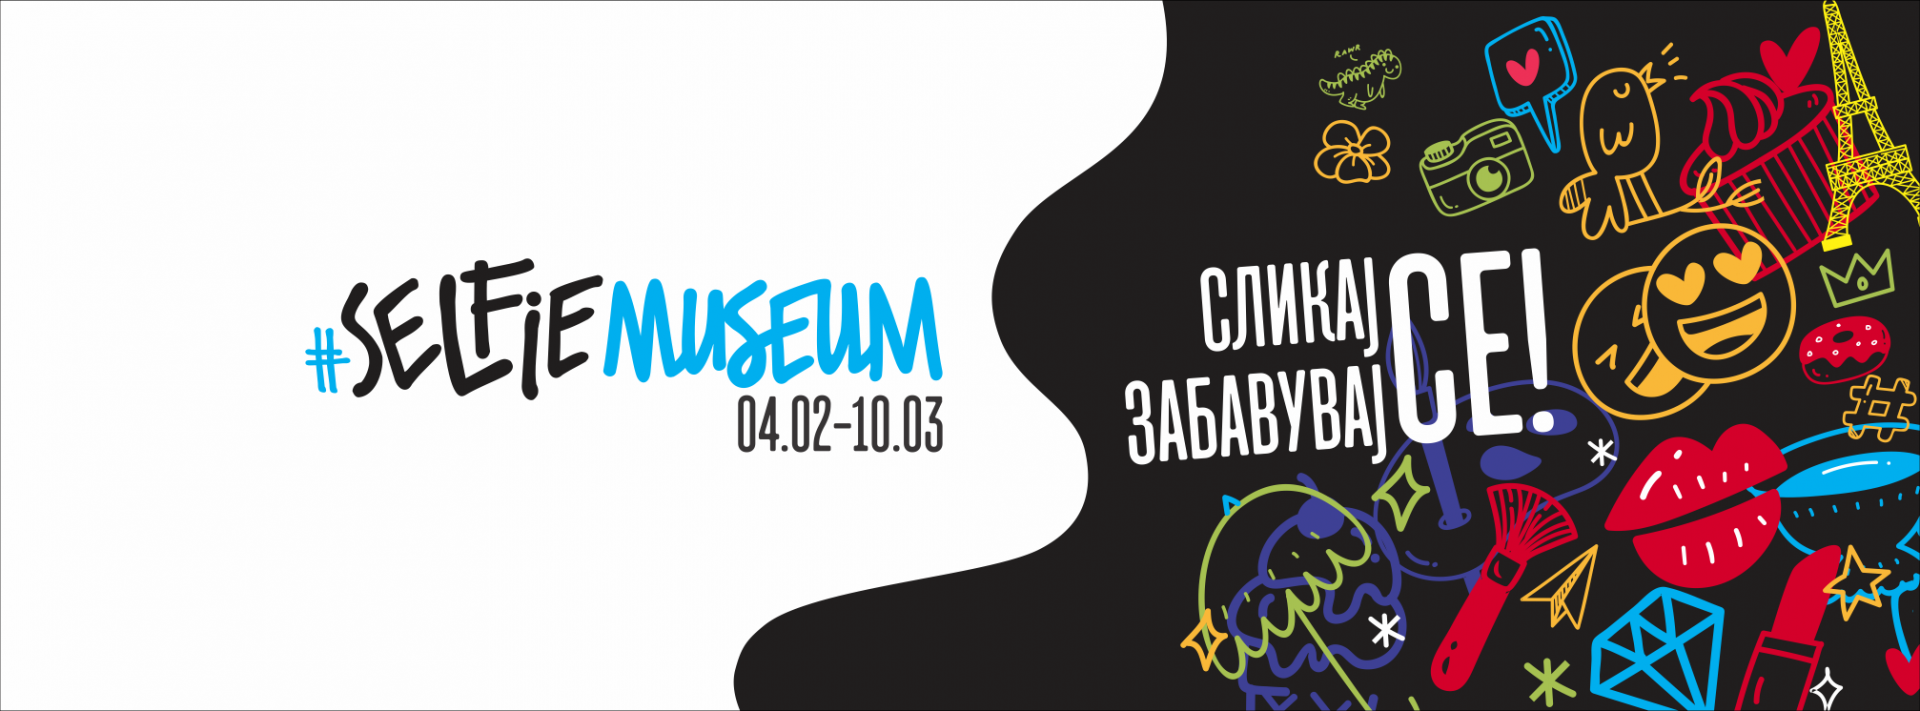 По светските трендови „Селфи музеј“ во Скопје Сити Мол